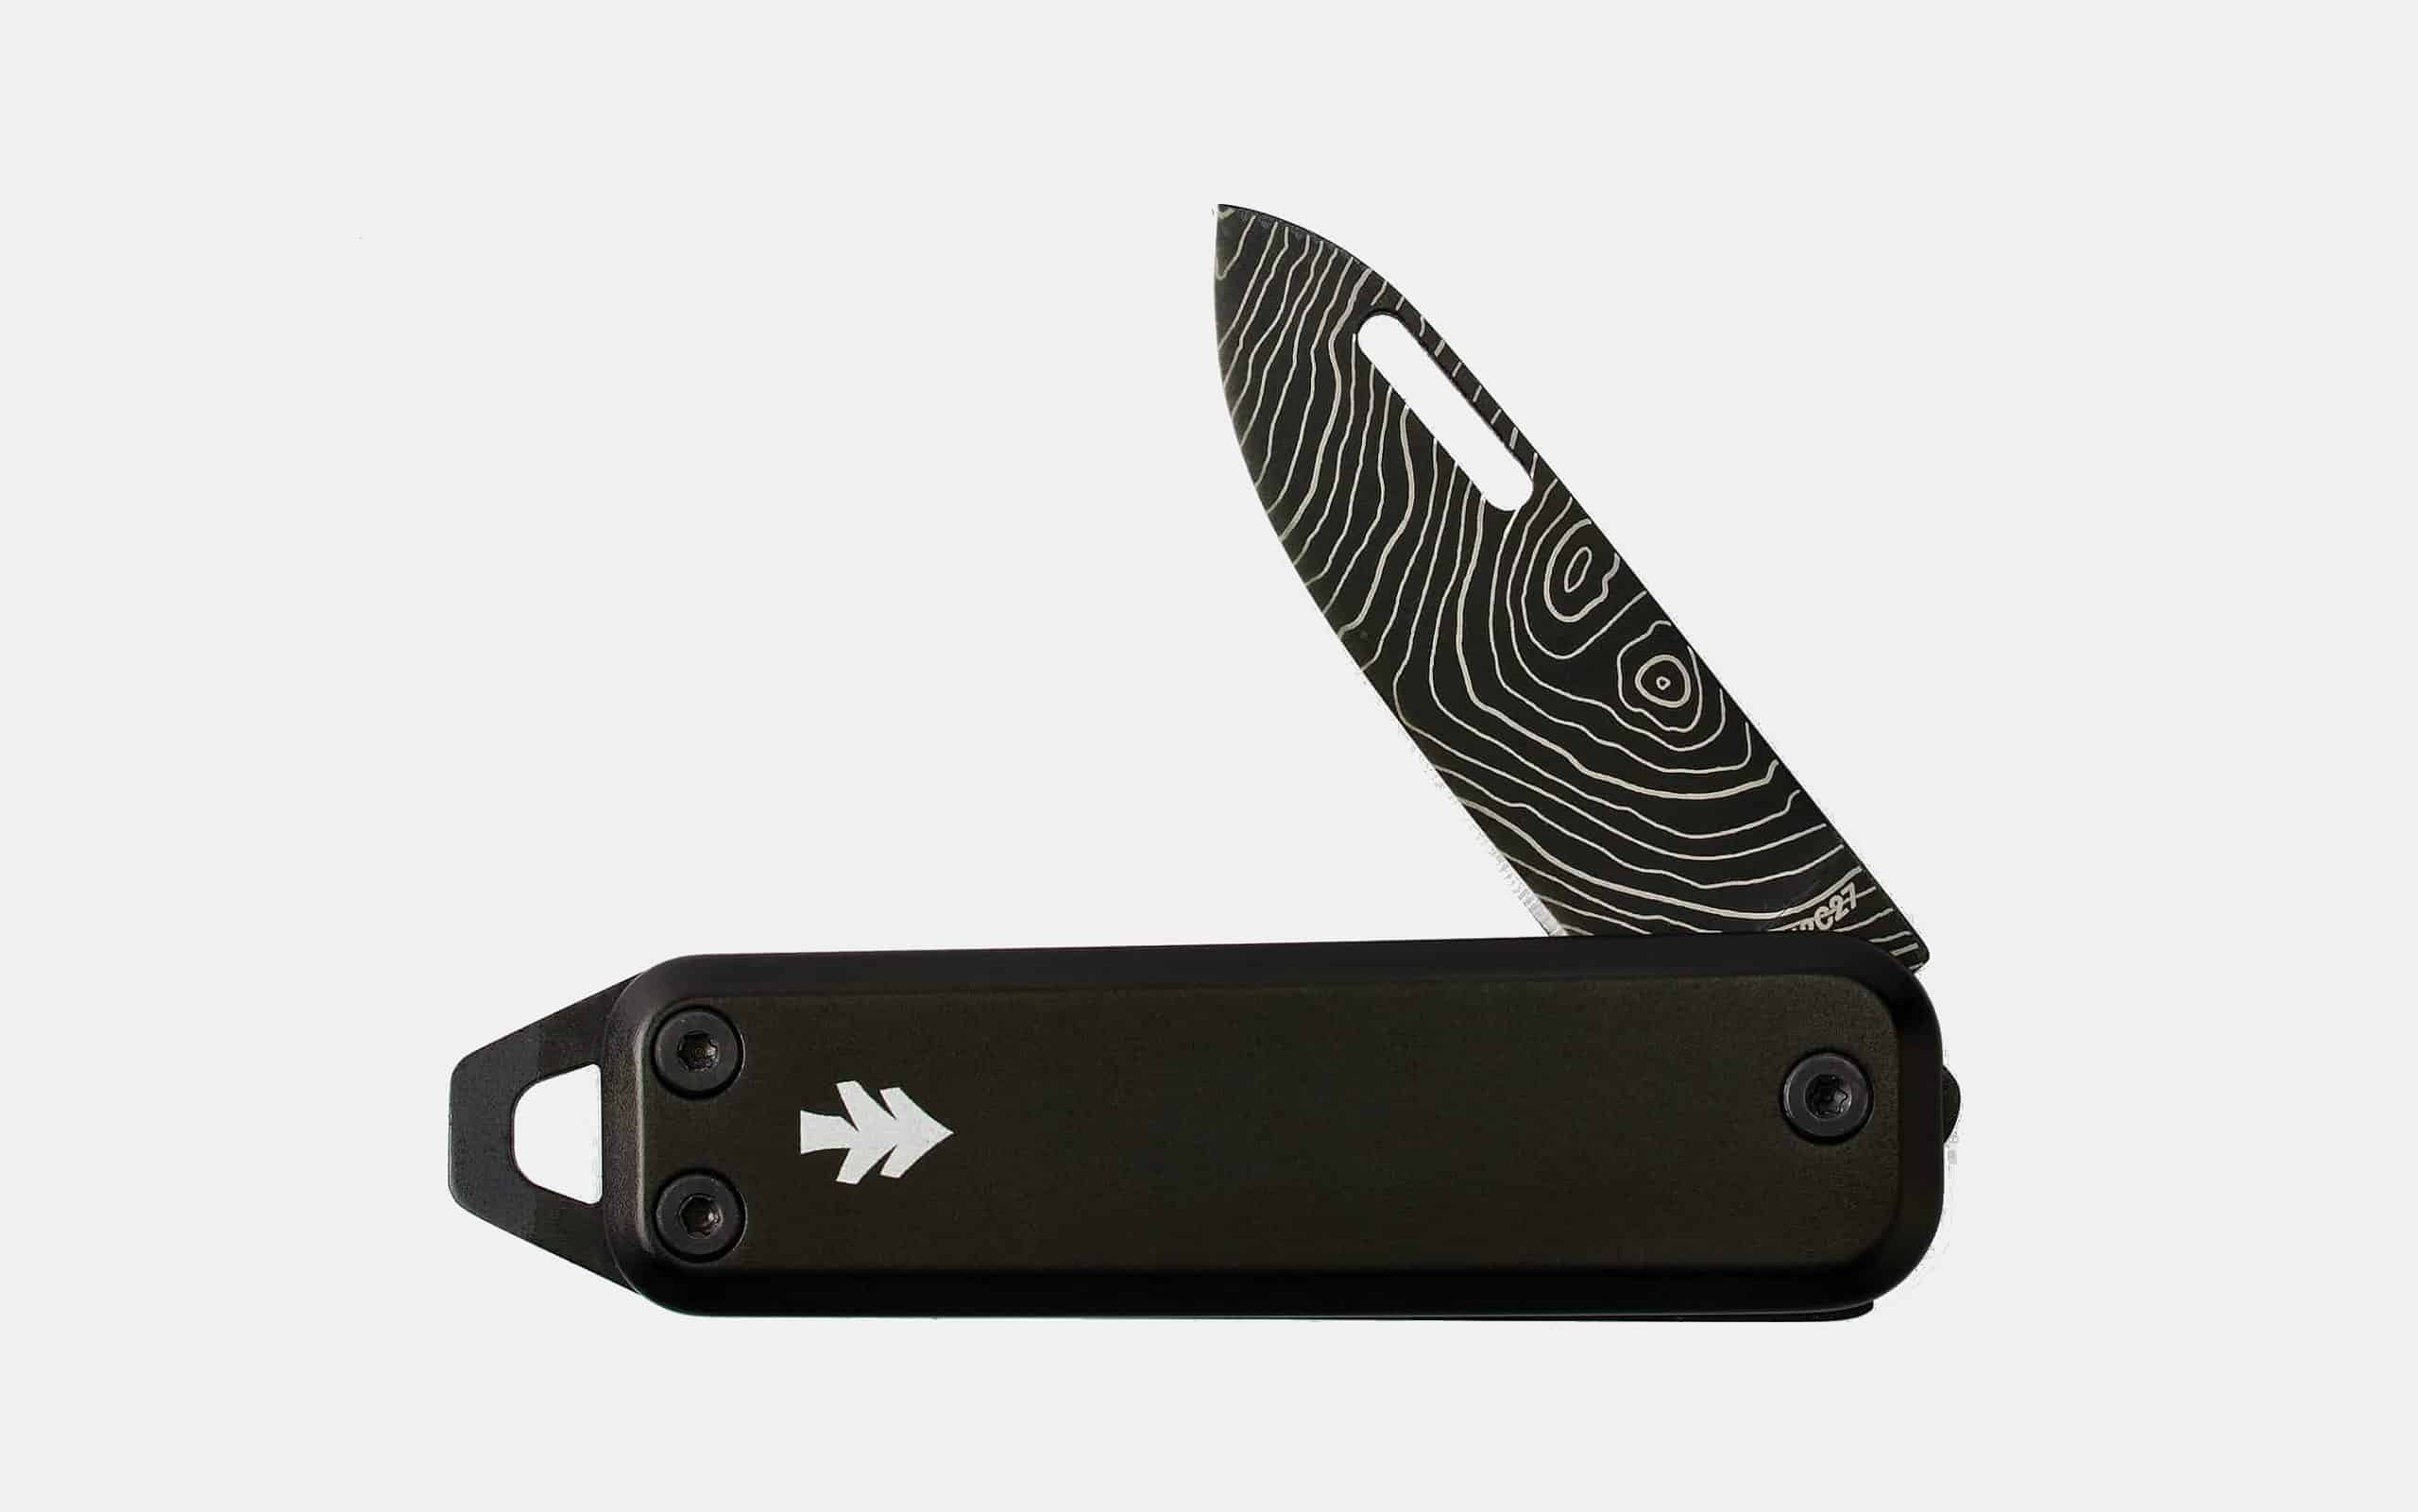 The James Brand x Huckberry Elko Knife